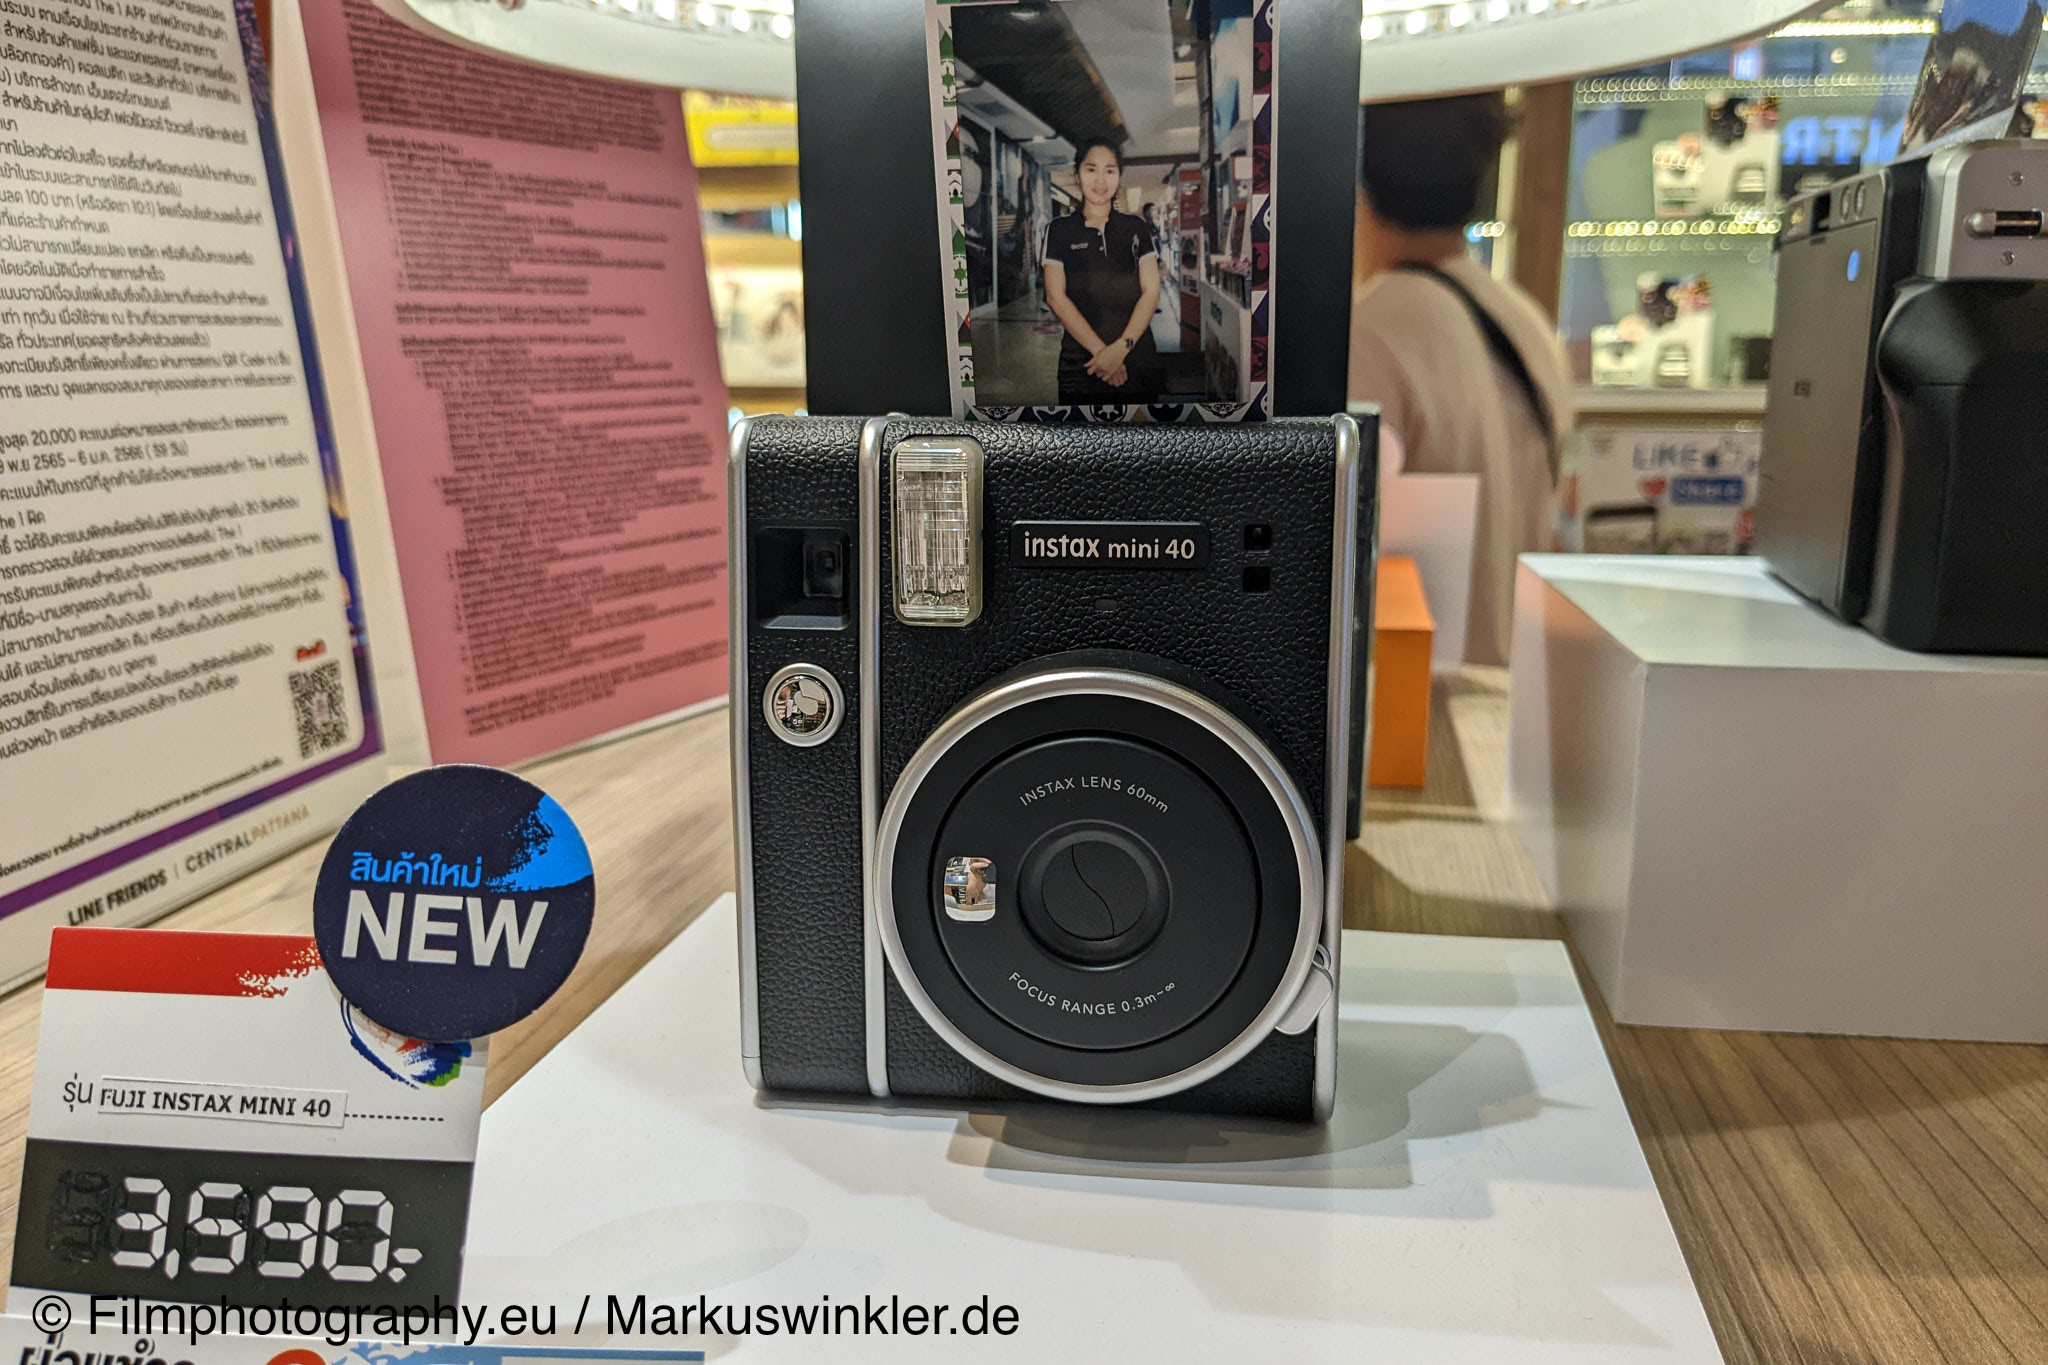 FUJIFILM instax mini 40 instant camera has a vintage look and selfie mode  option » Gadget Flow